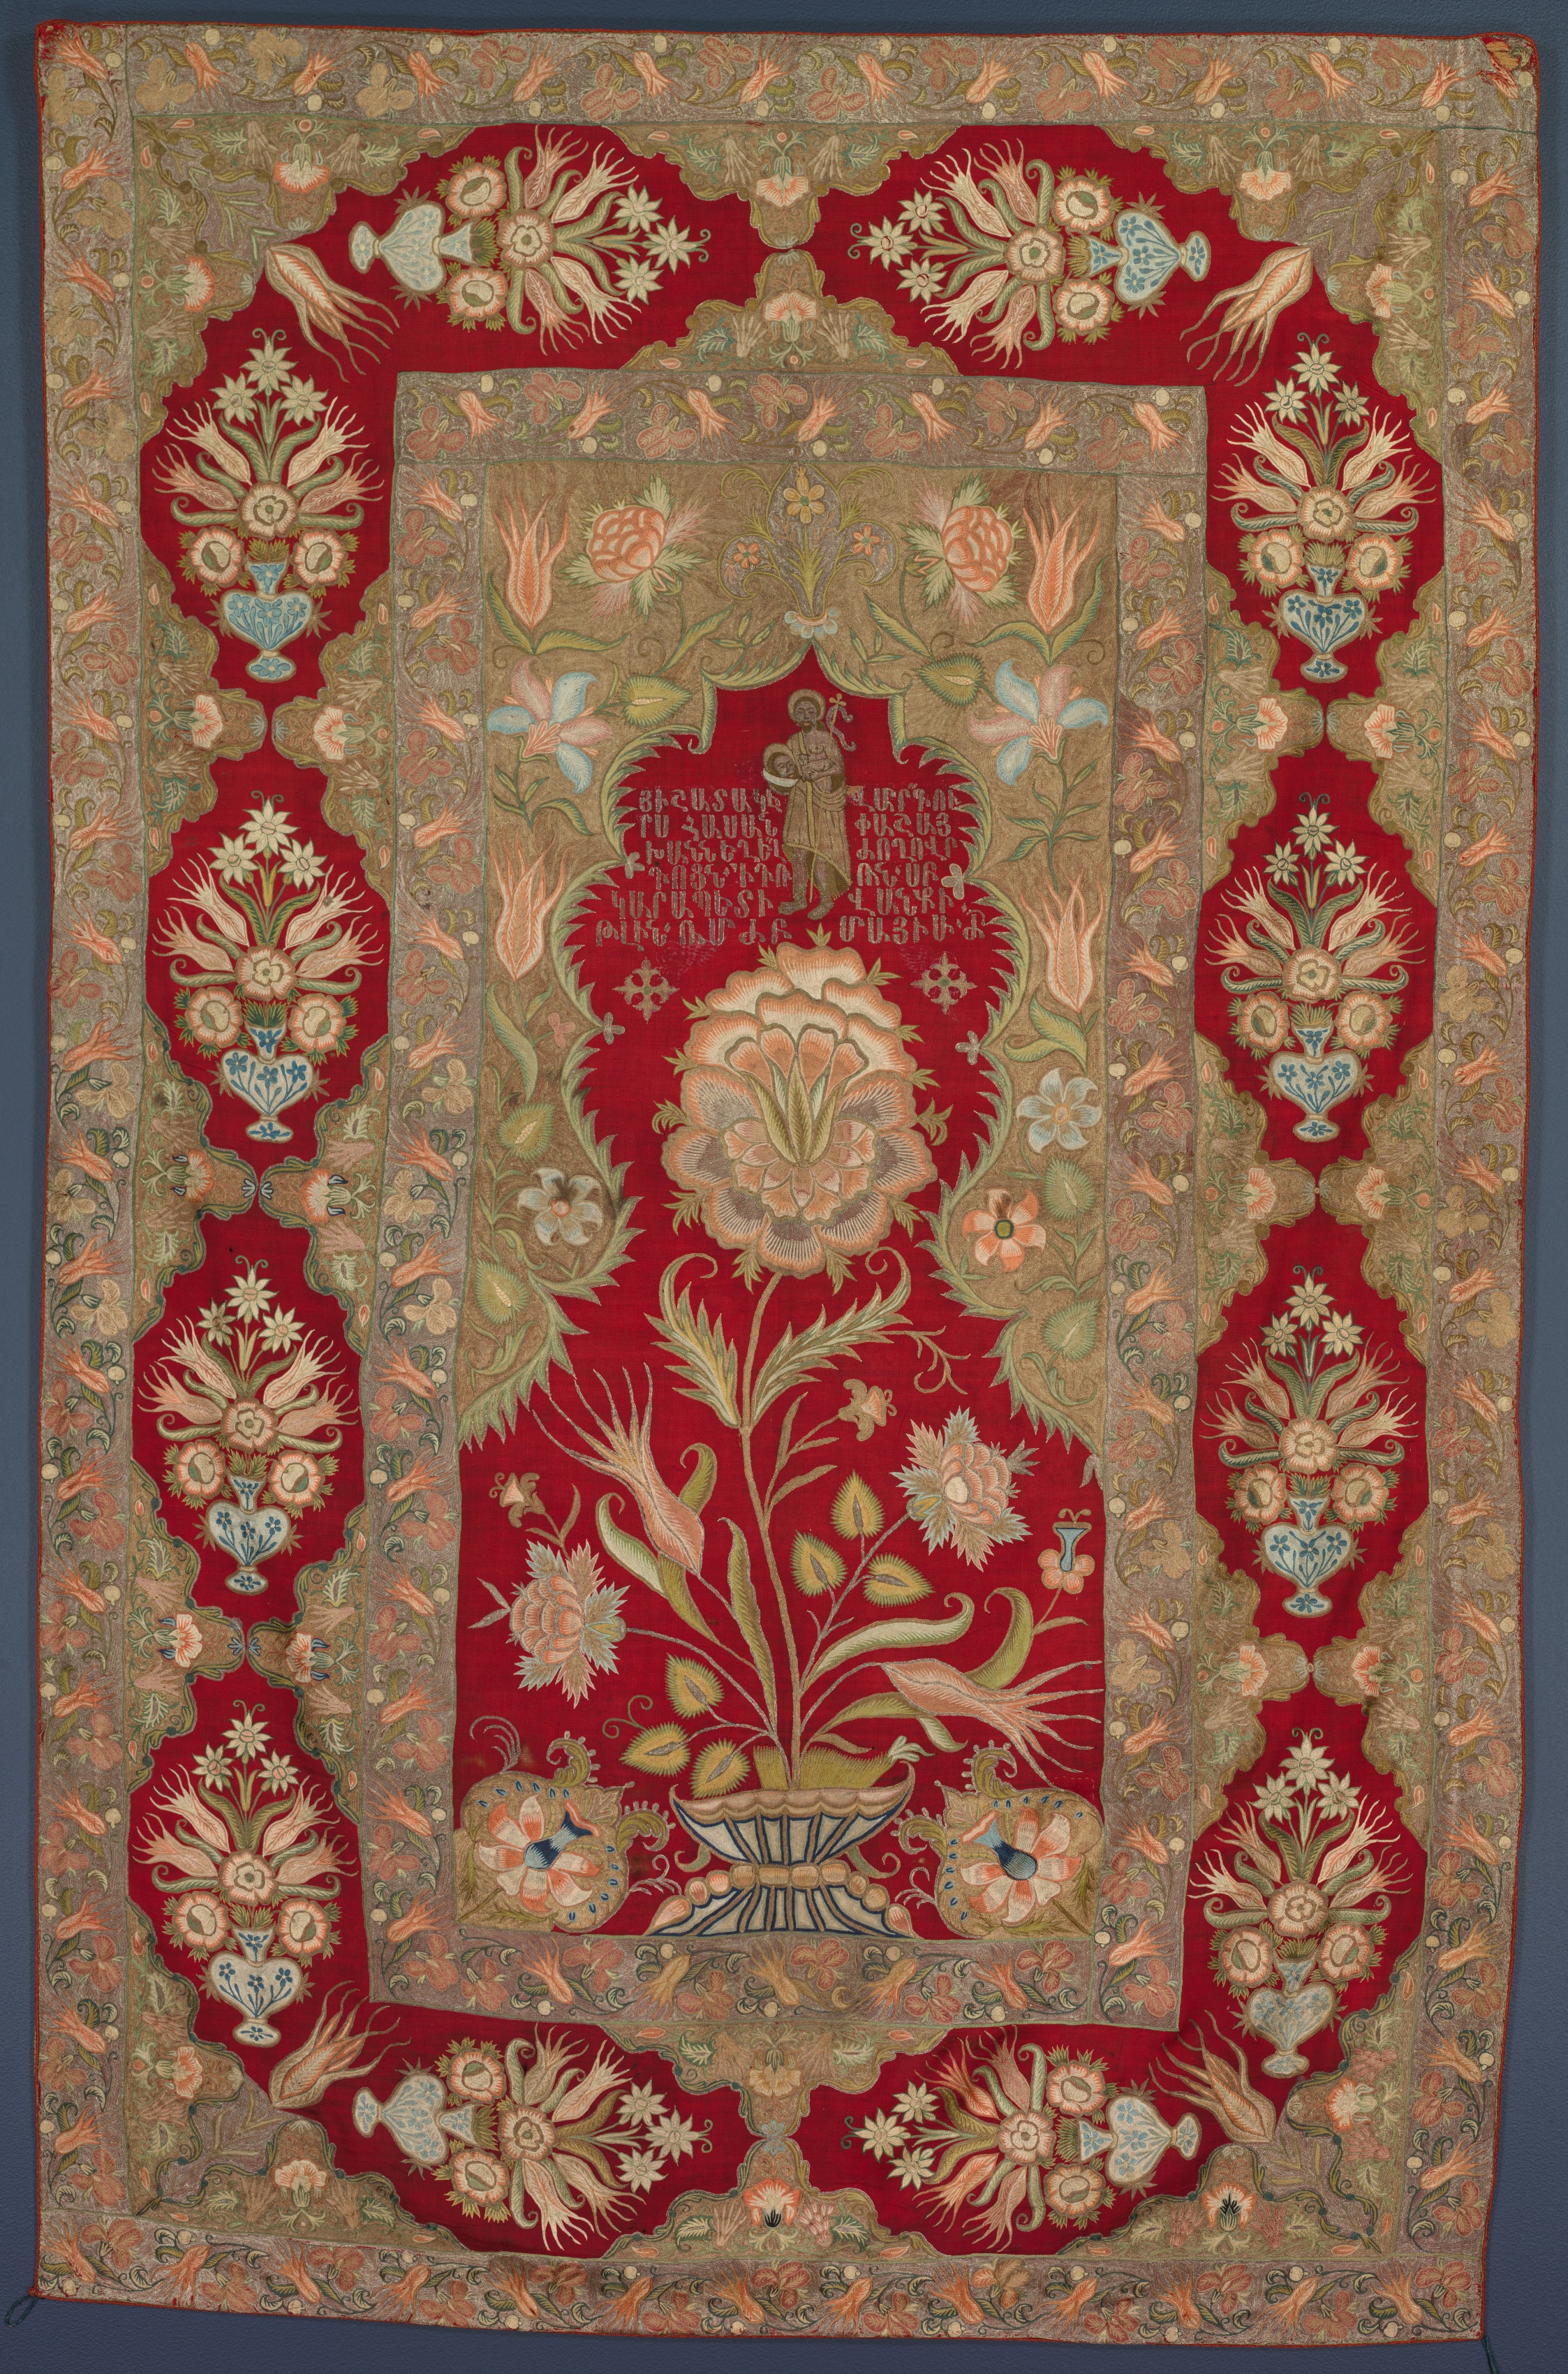 Embroidered Armenian liturgical curtain